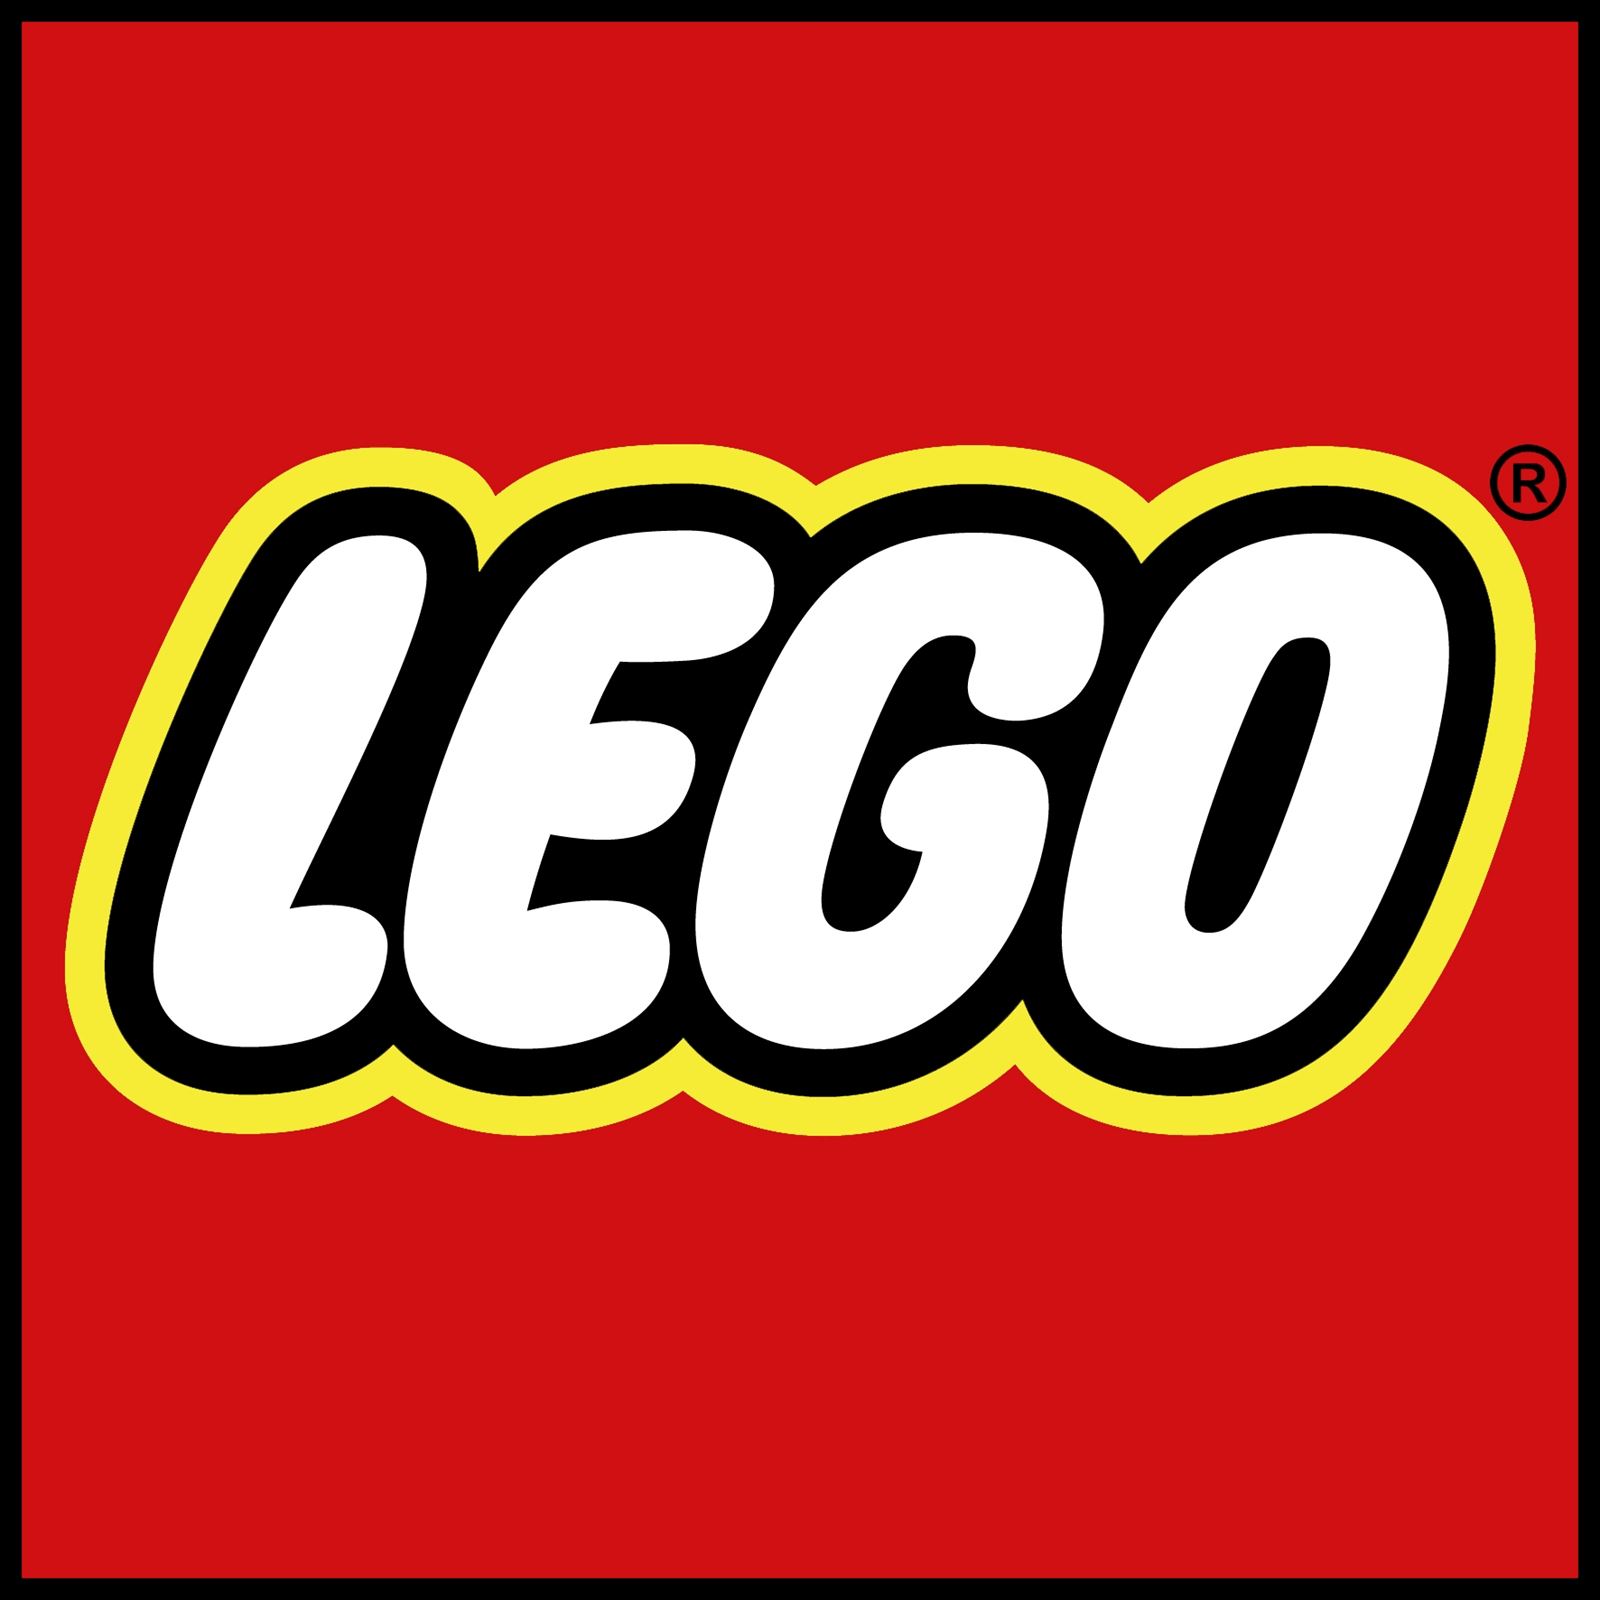 LEGO 11025 LA PLAQUE DE CONSTRUCTION BLEUE